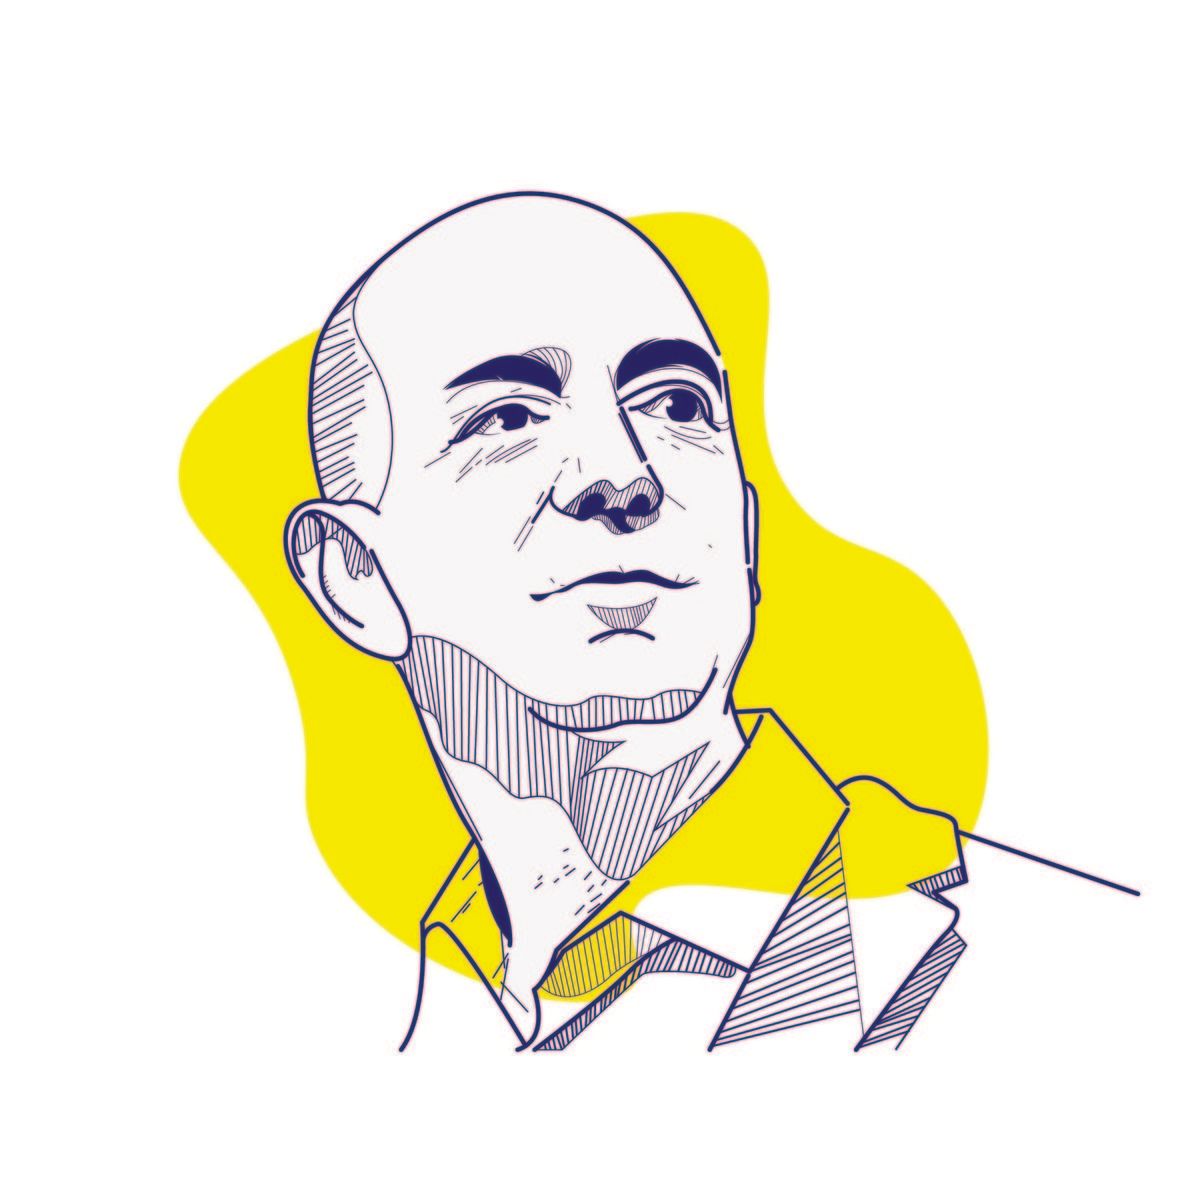 Jeff Bezos' Letter to Amazon Shareholders amid the COVID-19 Crisis